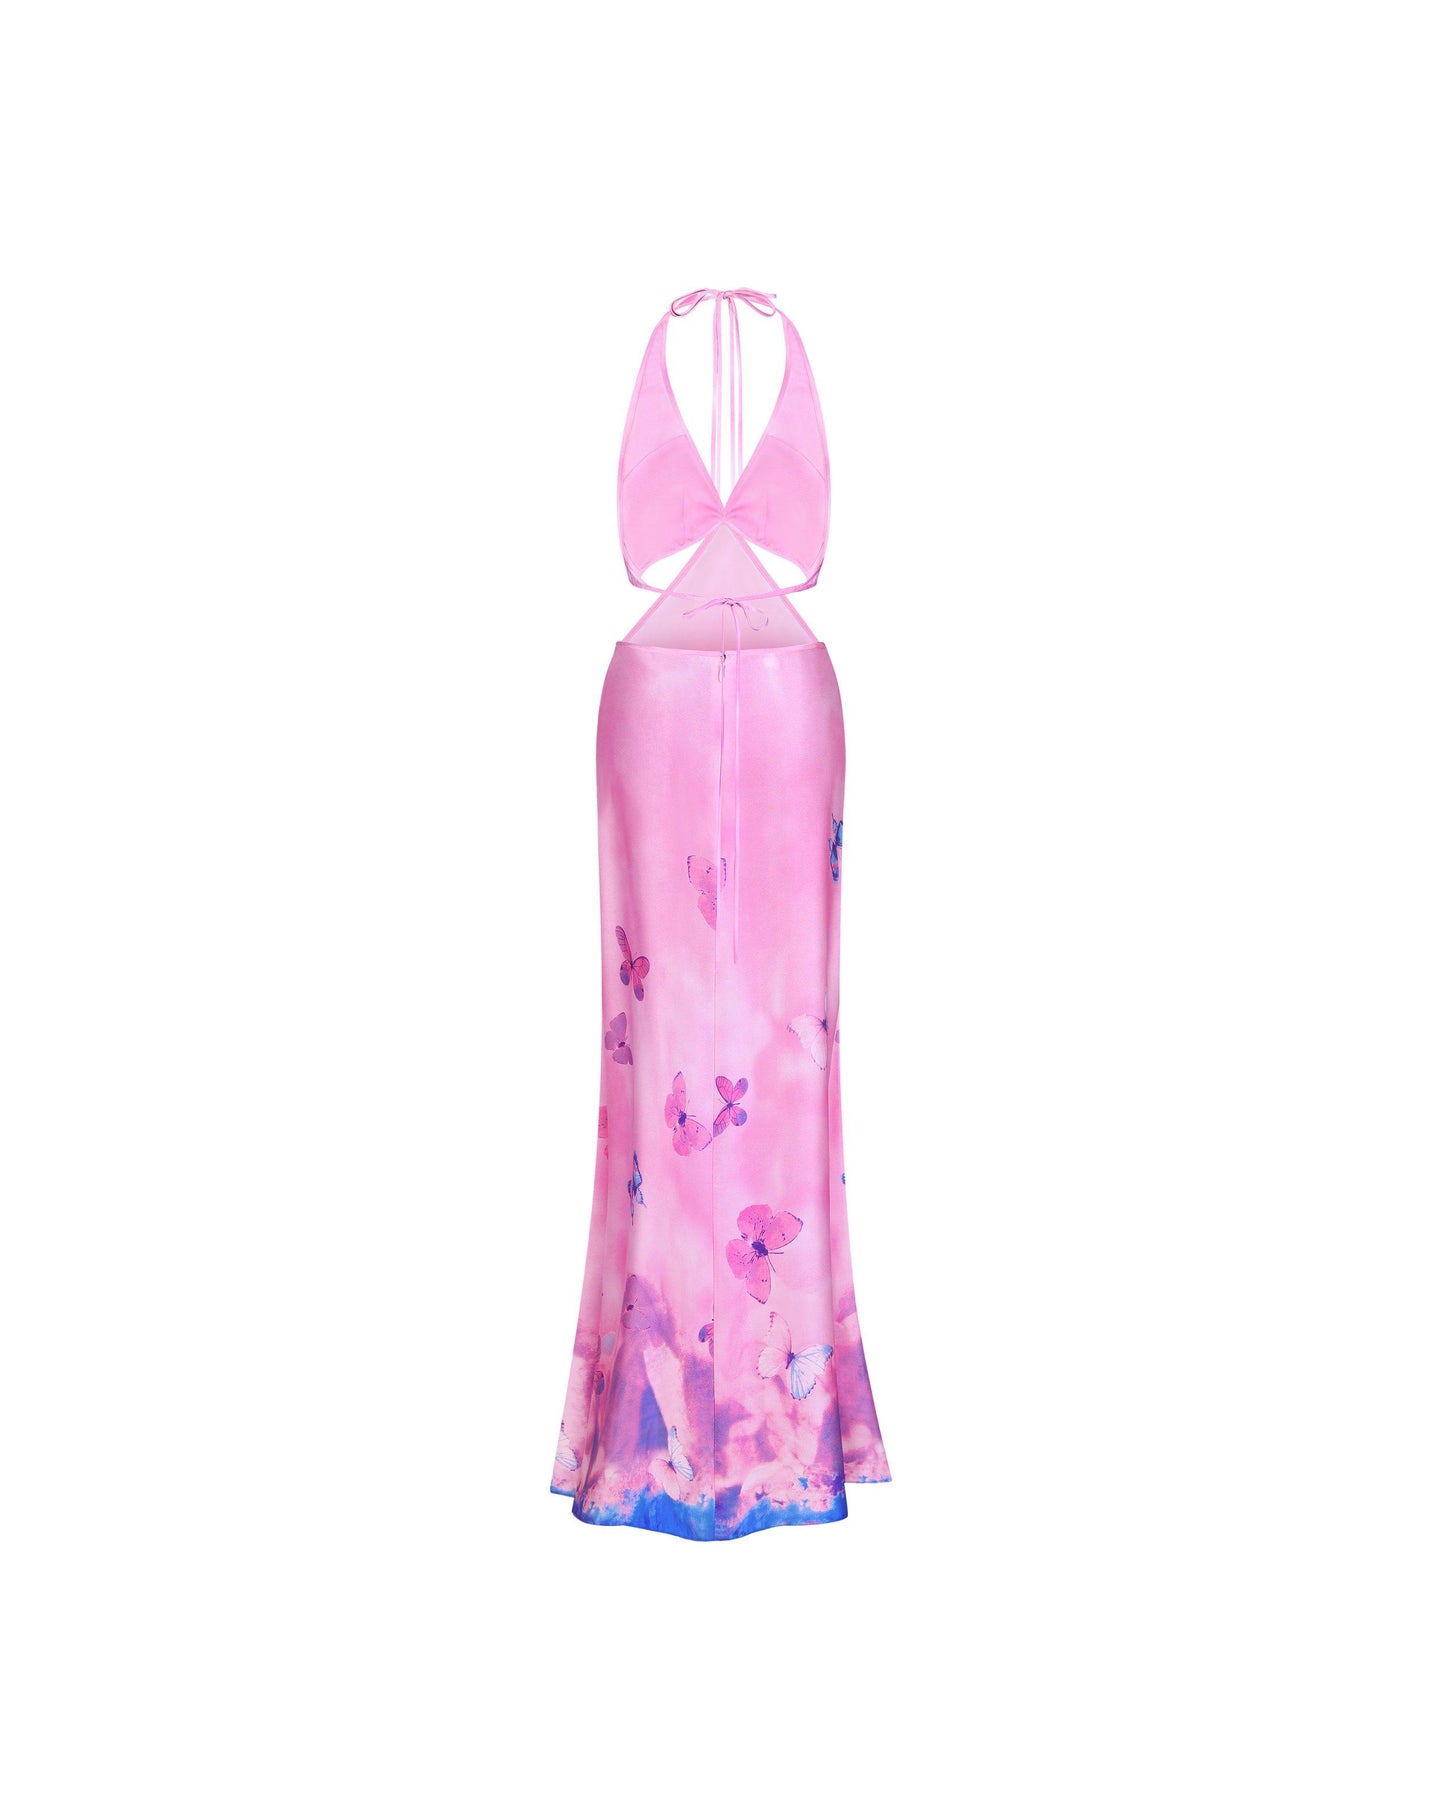 Ms. Pleat Cut-Out Dress (Pink Meadow)